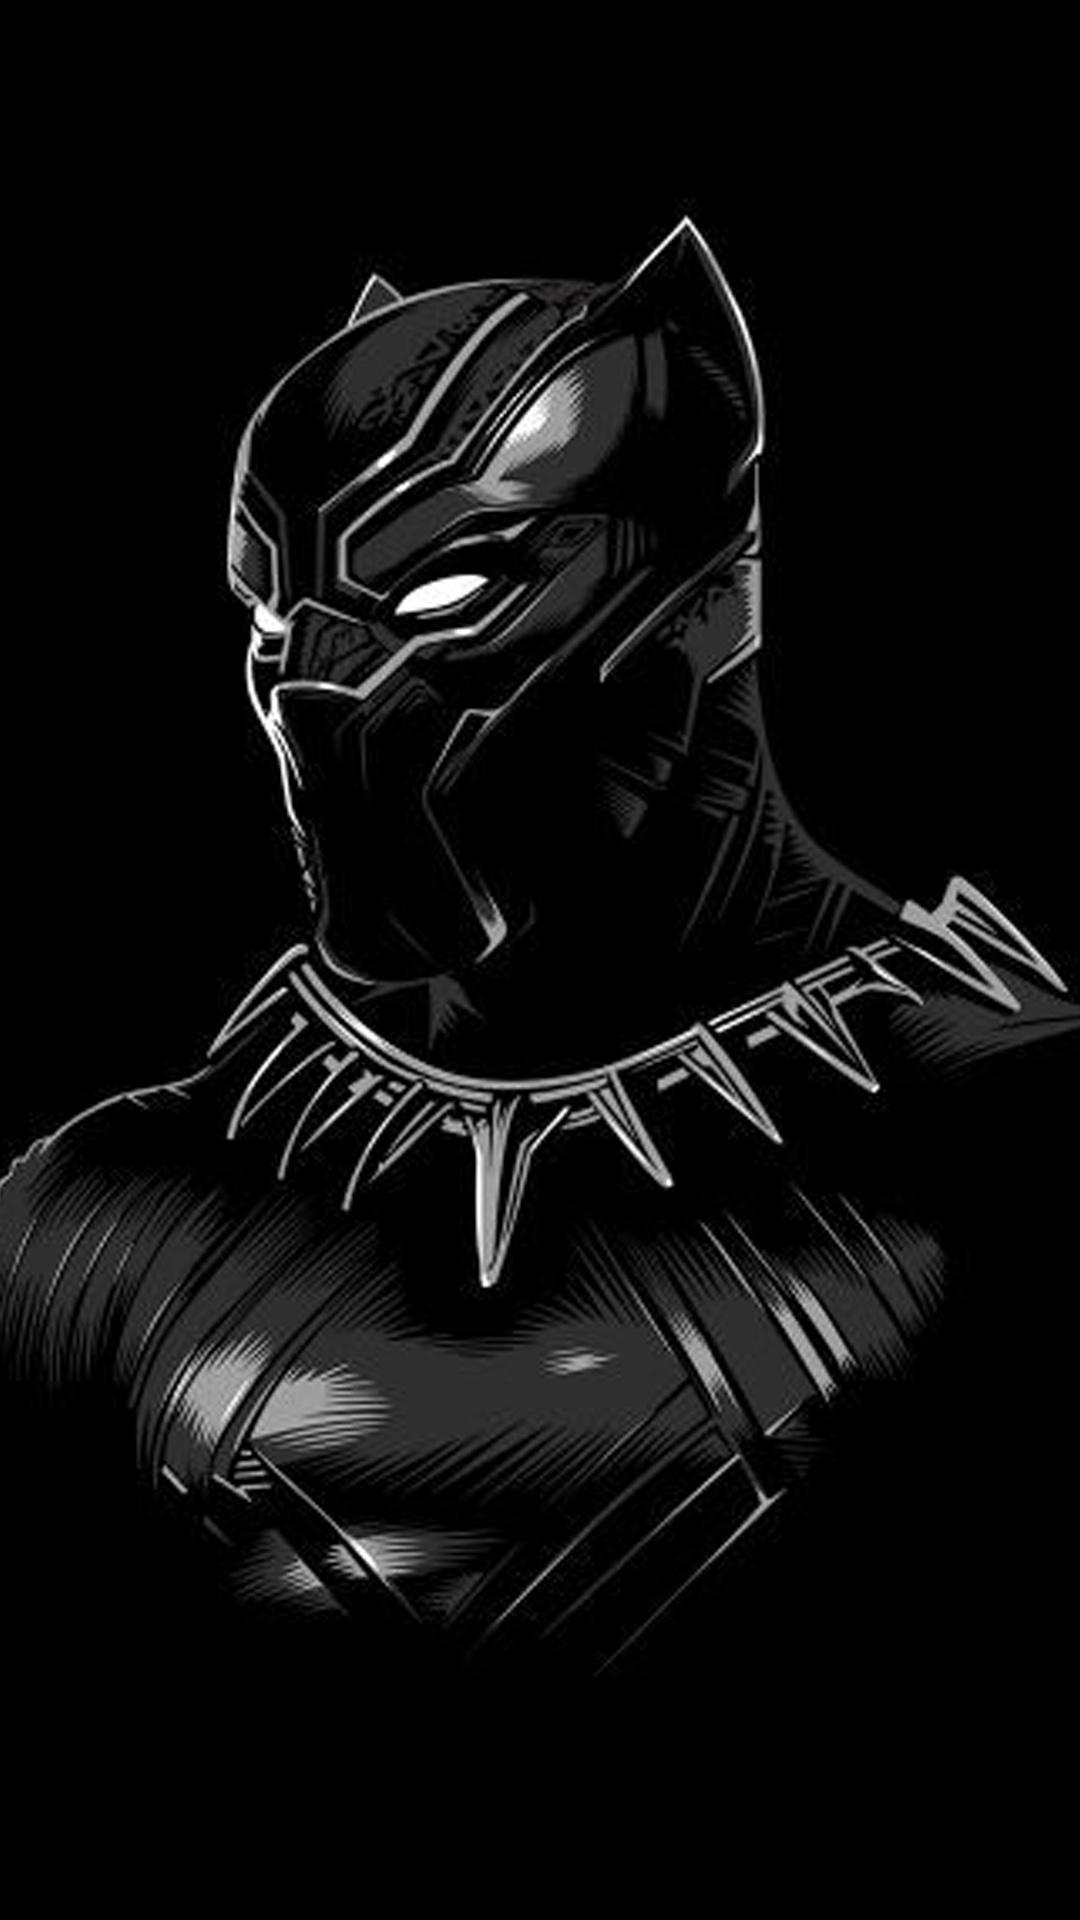 Black Panther Wallpaper, High Resolution Black Panther Background